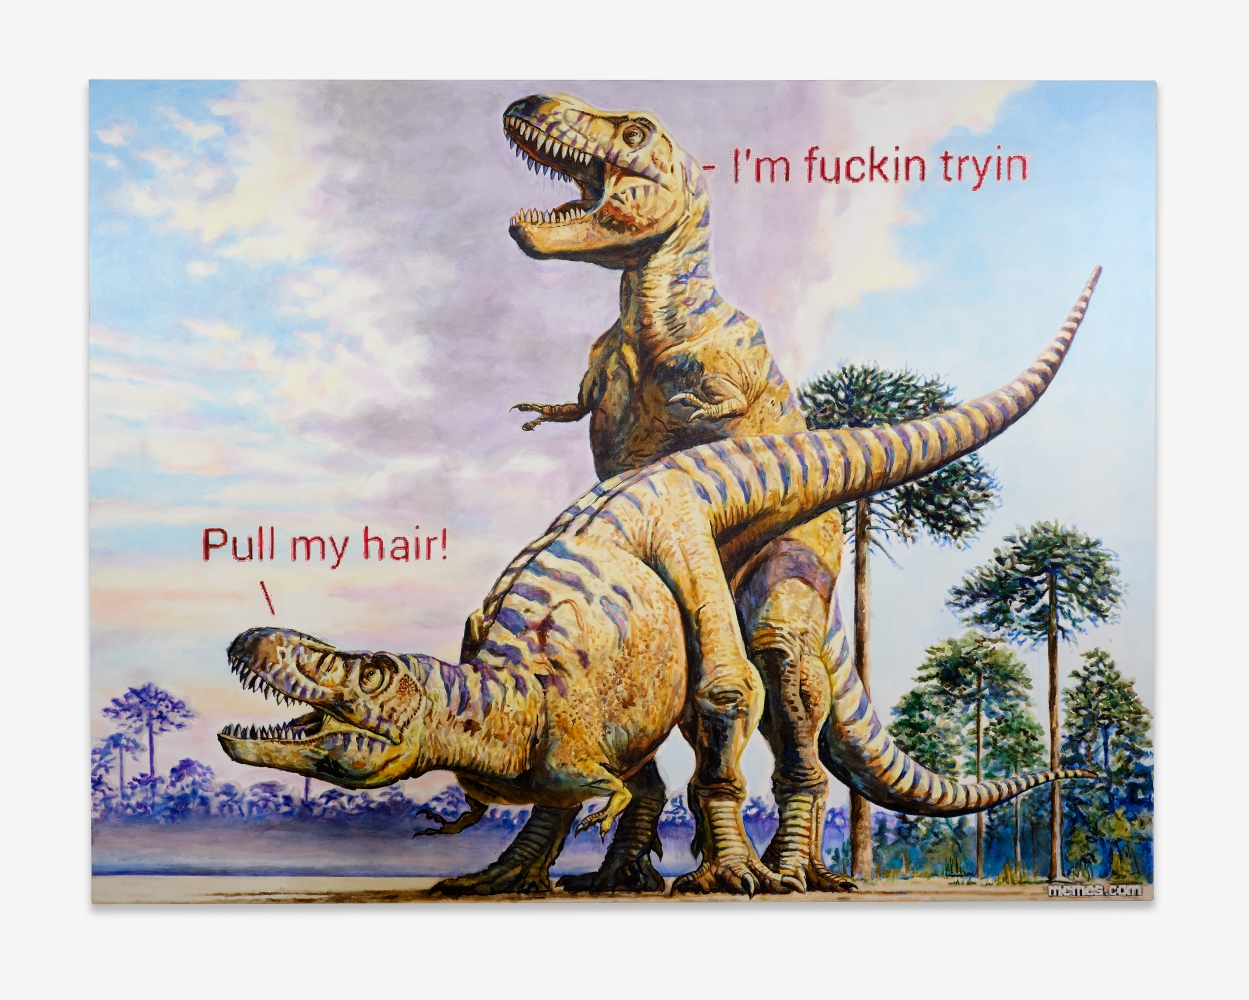 Christine&amp;nbsp;Wang
Dinosaur, 2020
acrylic on canvas
84 x 108 in (213.4 x 274.3 cm)
CW164